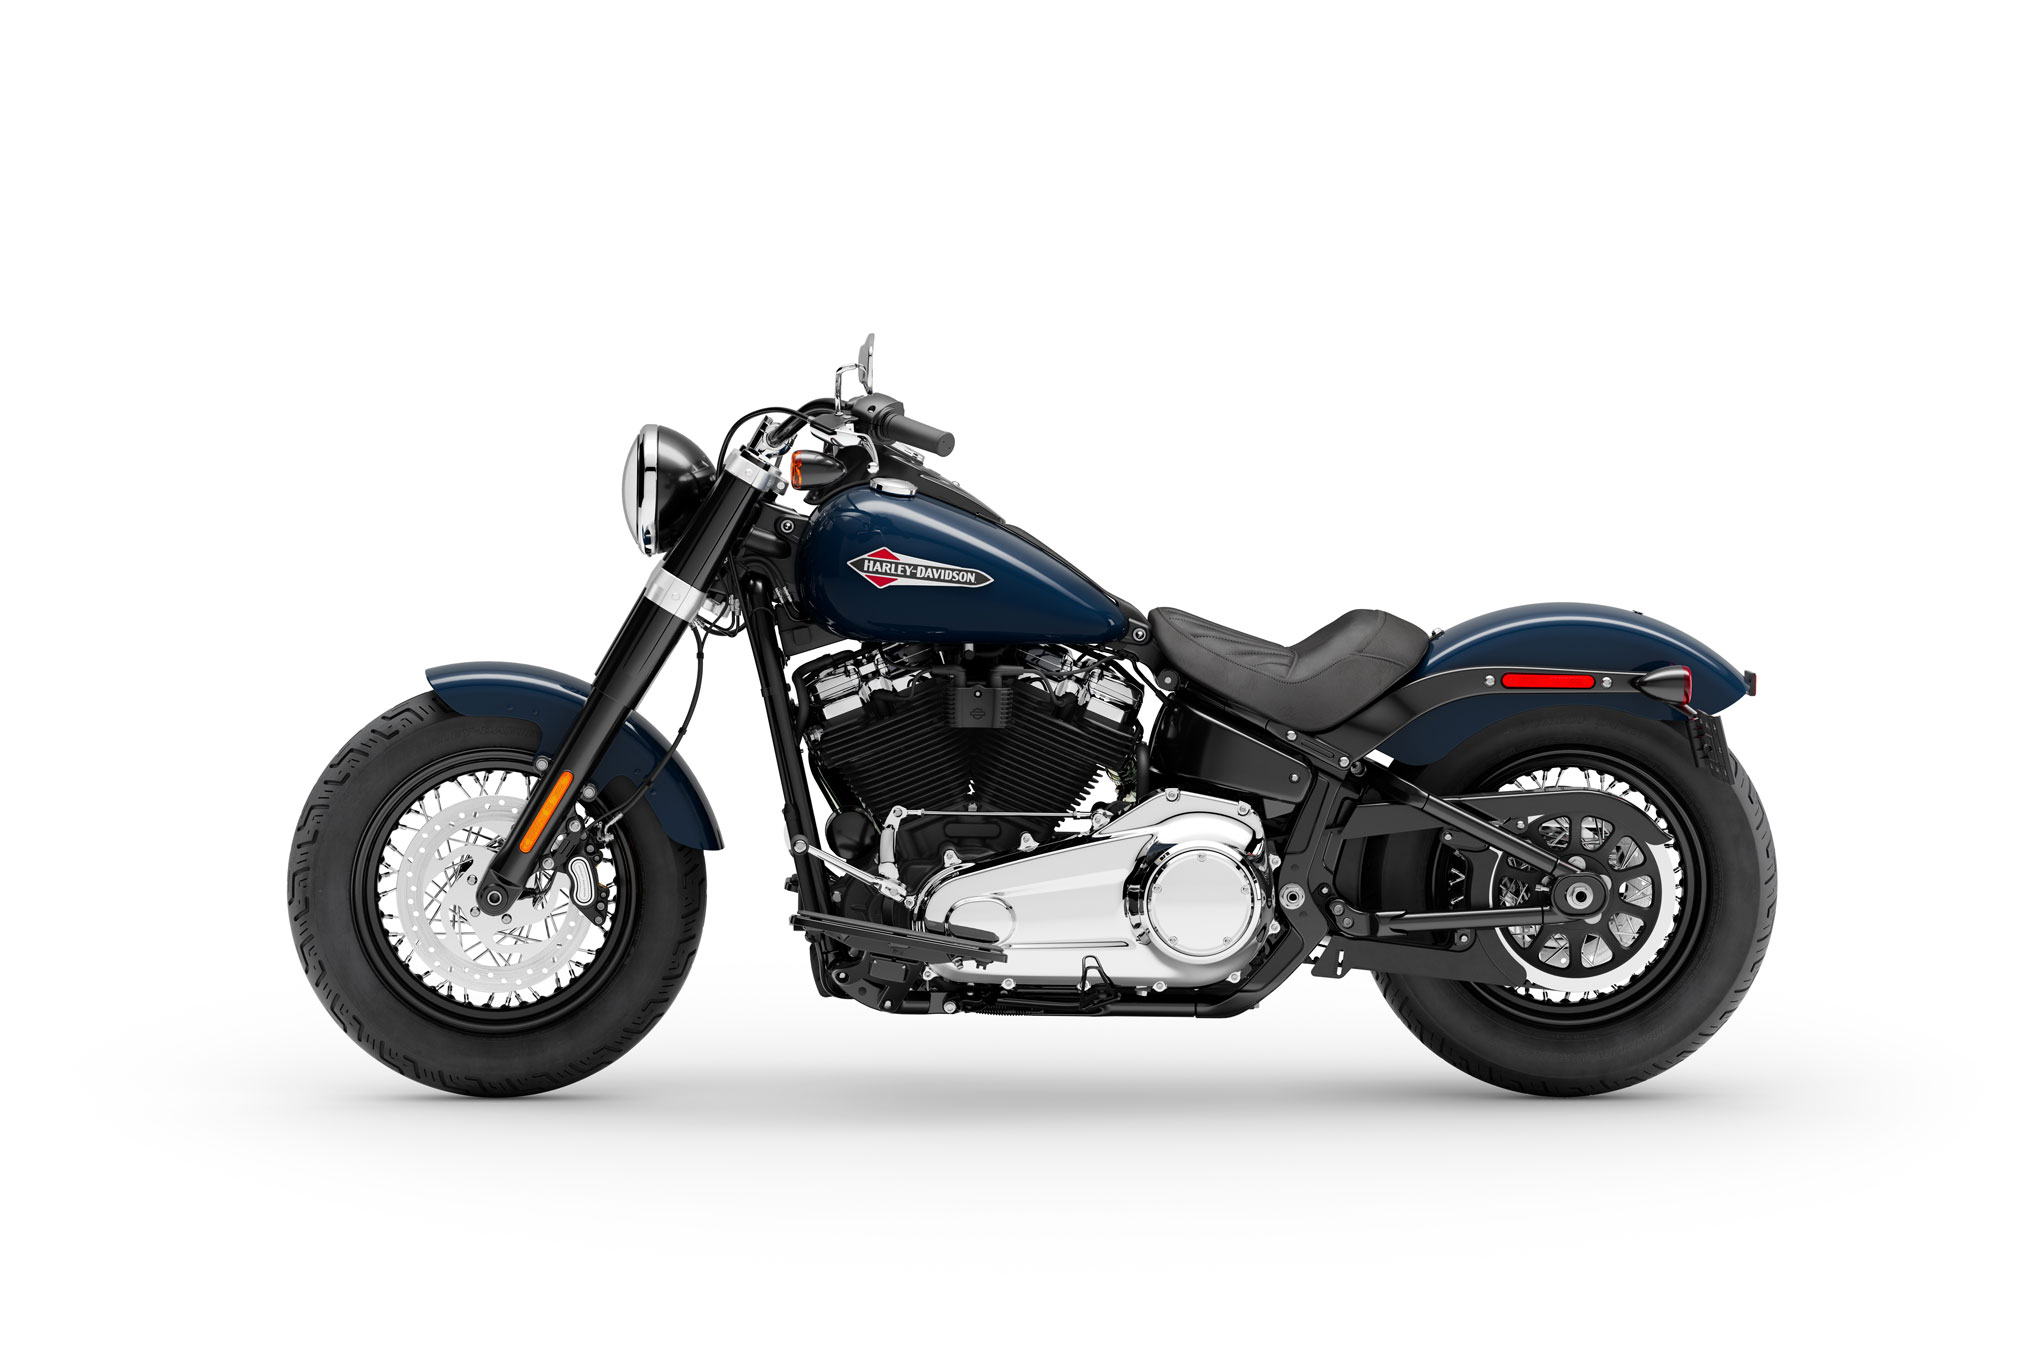 2019 Harley Davidson Softail Slim Guide Total Motorcycle